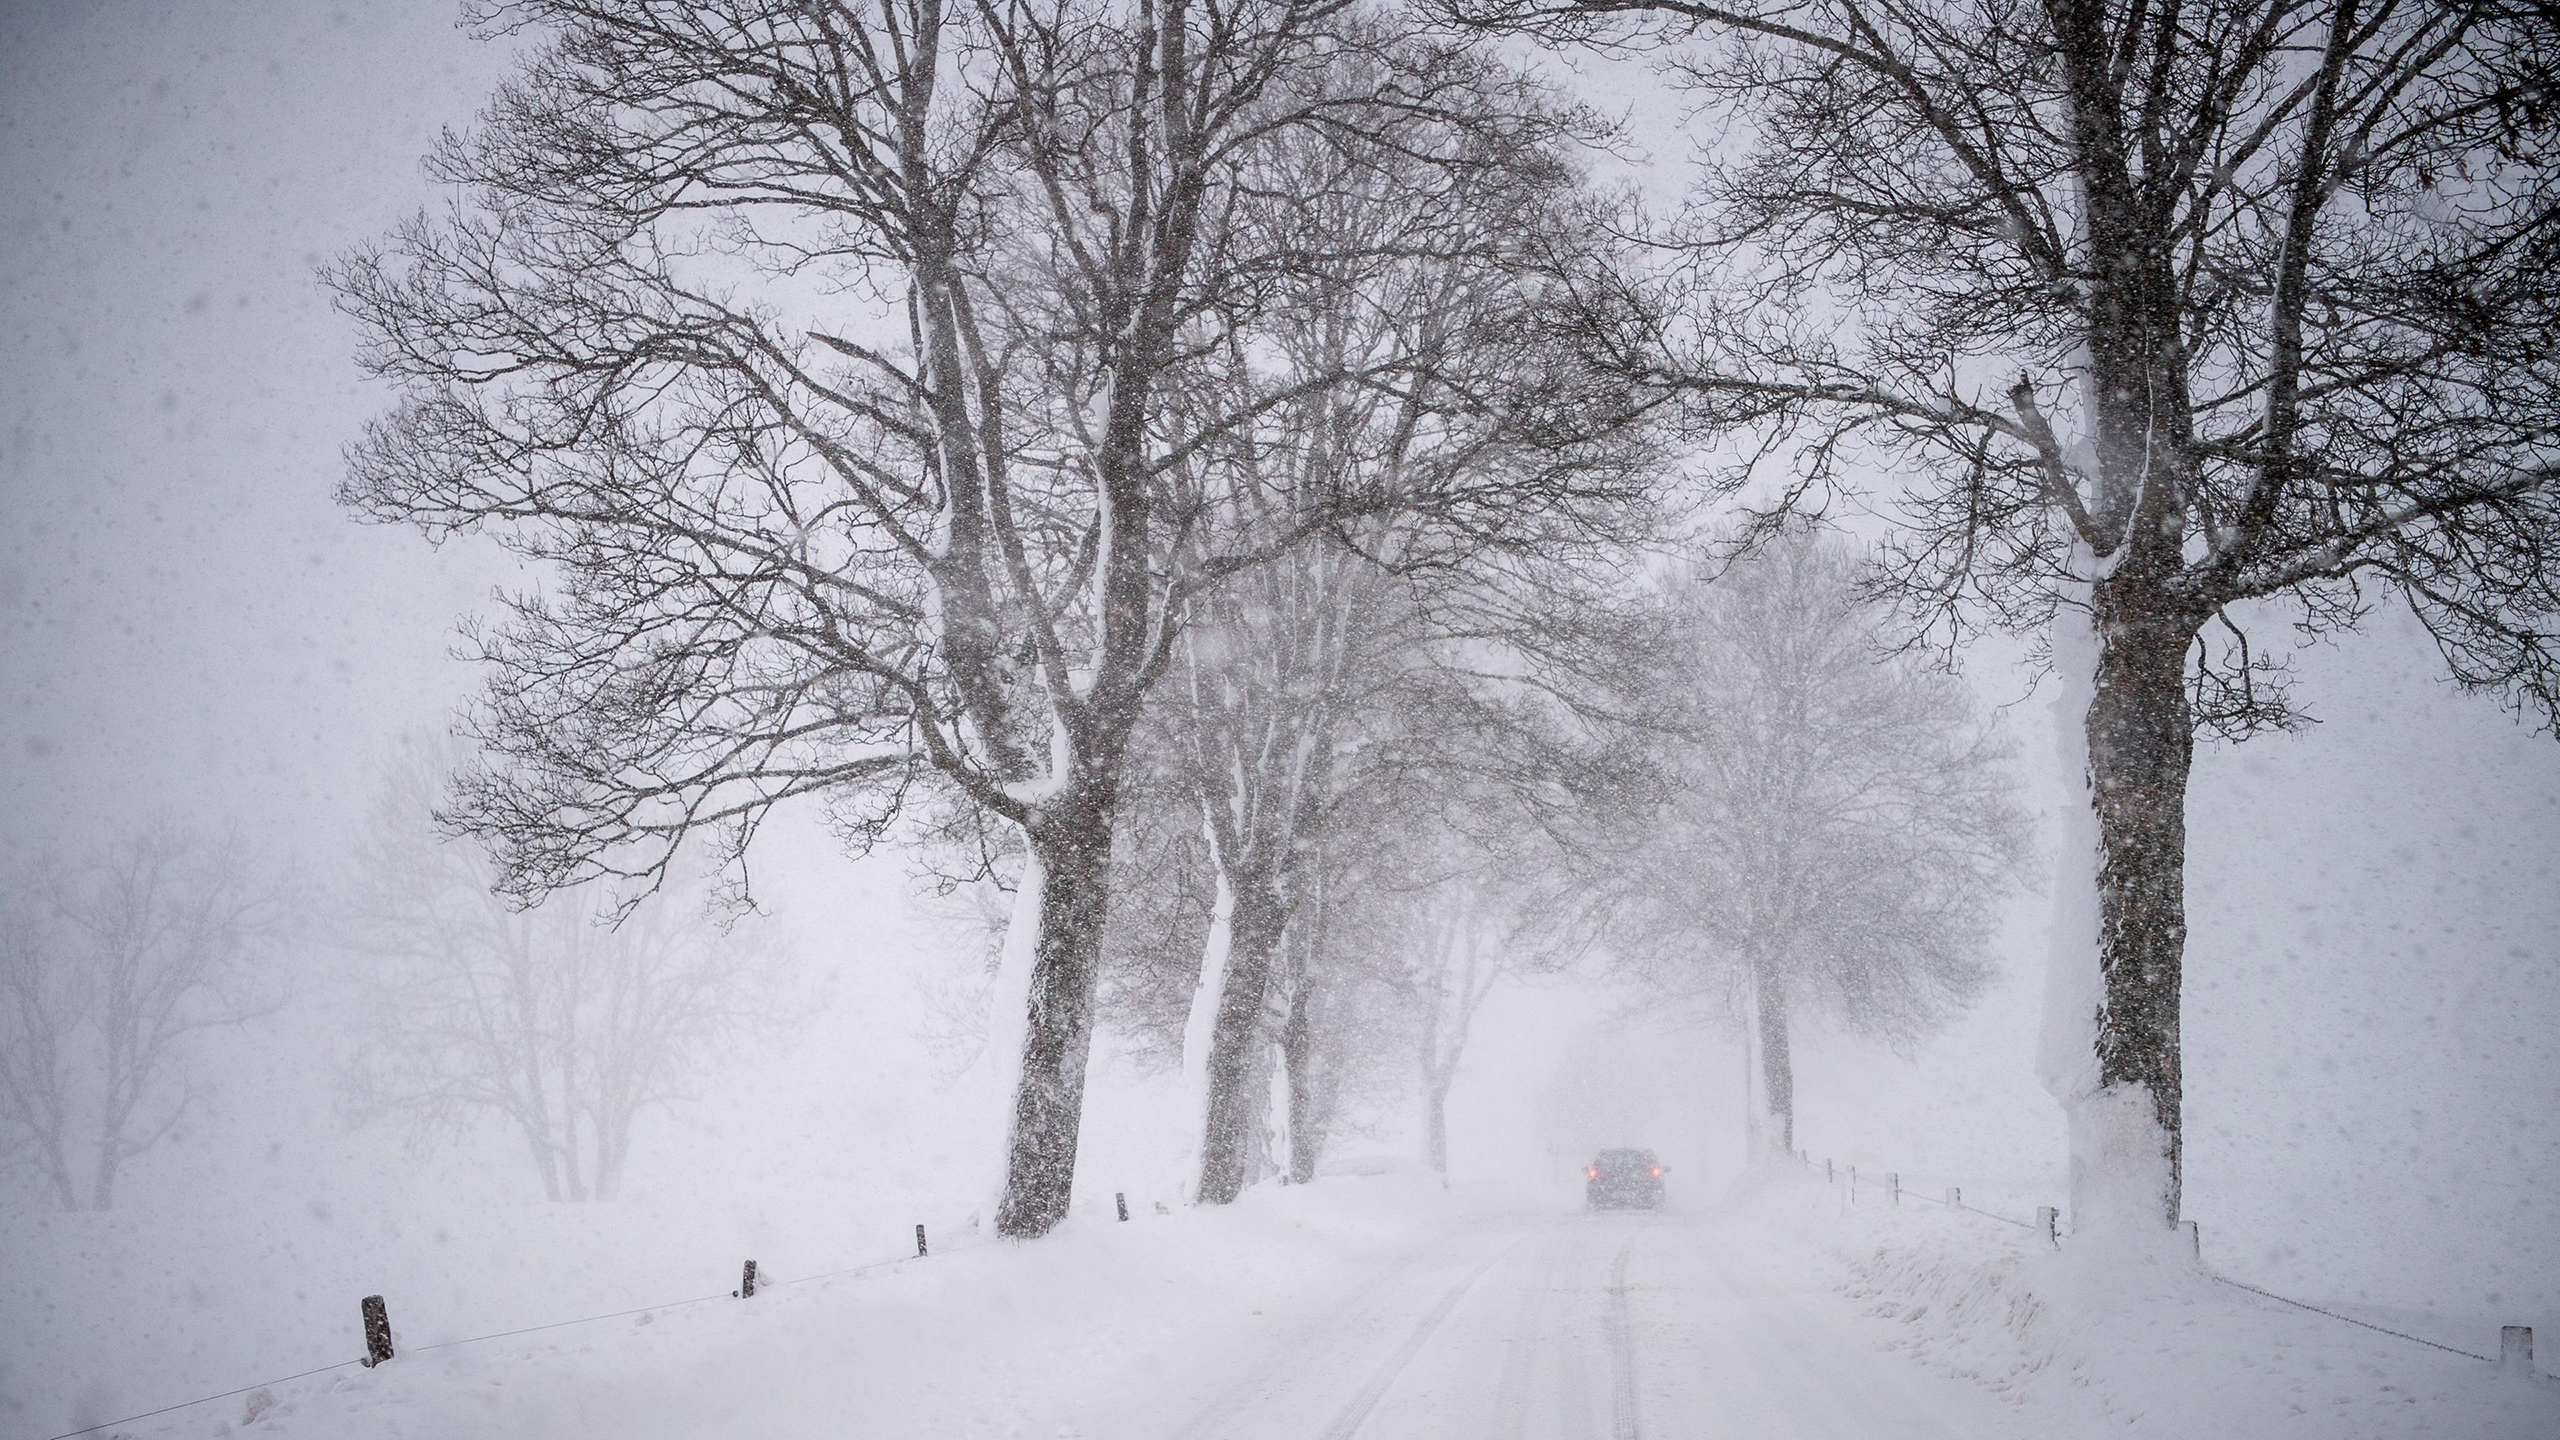 Road Snow Winter Storm Trees Car Nature Landscape 2560x1440